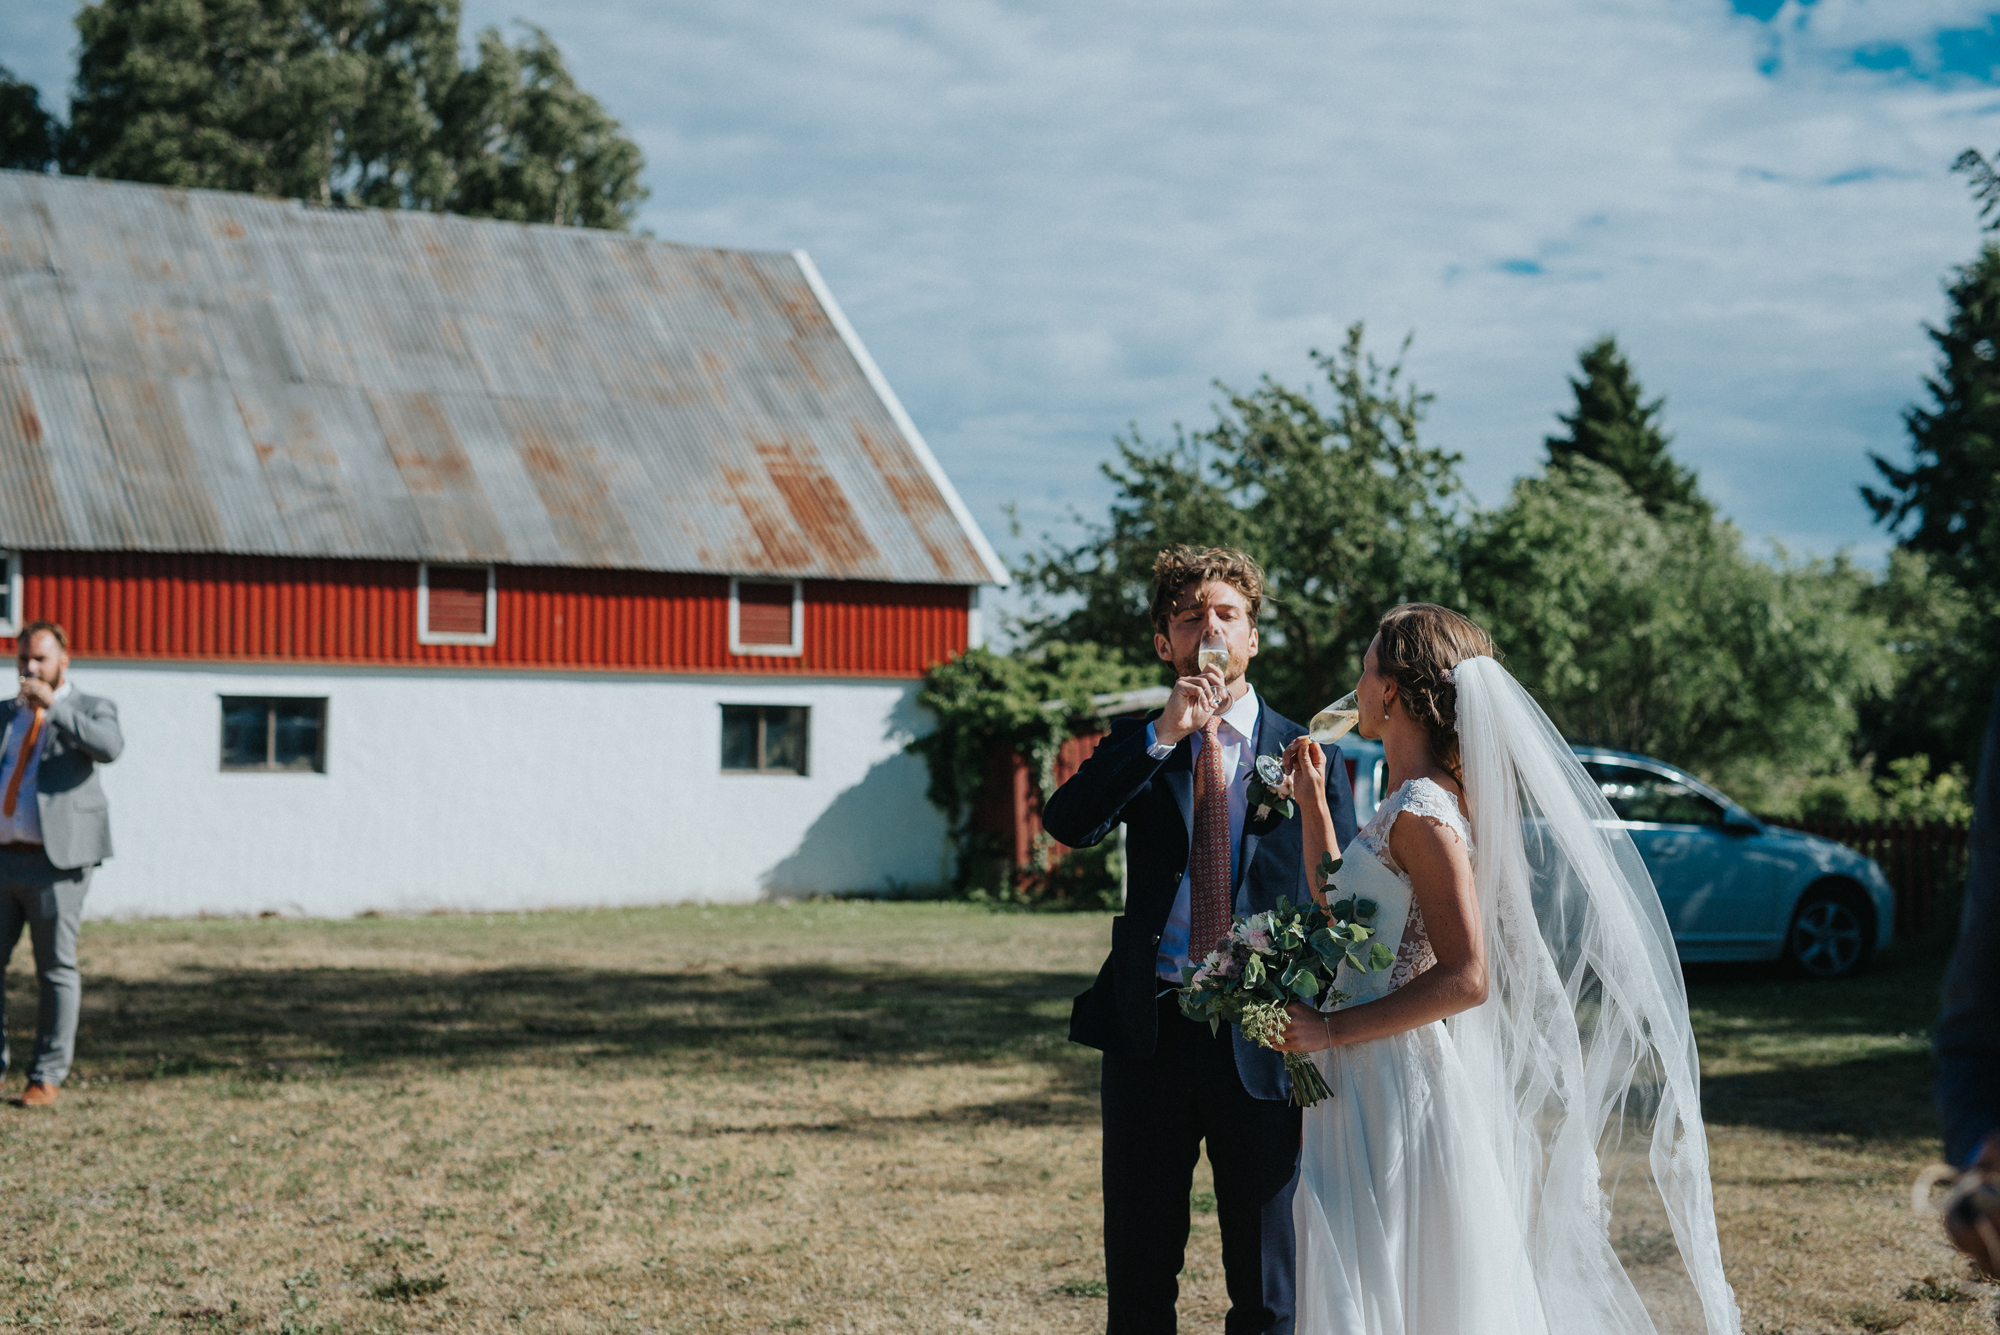 023-bröllop-hemma-hos-ulrika-gotland-neas-fotografi.jpg